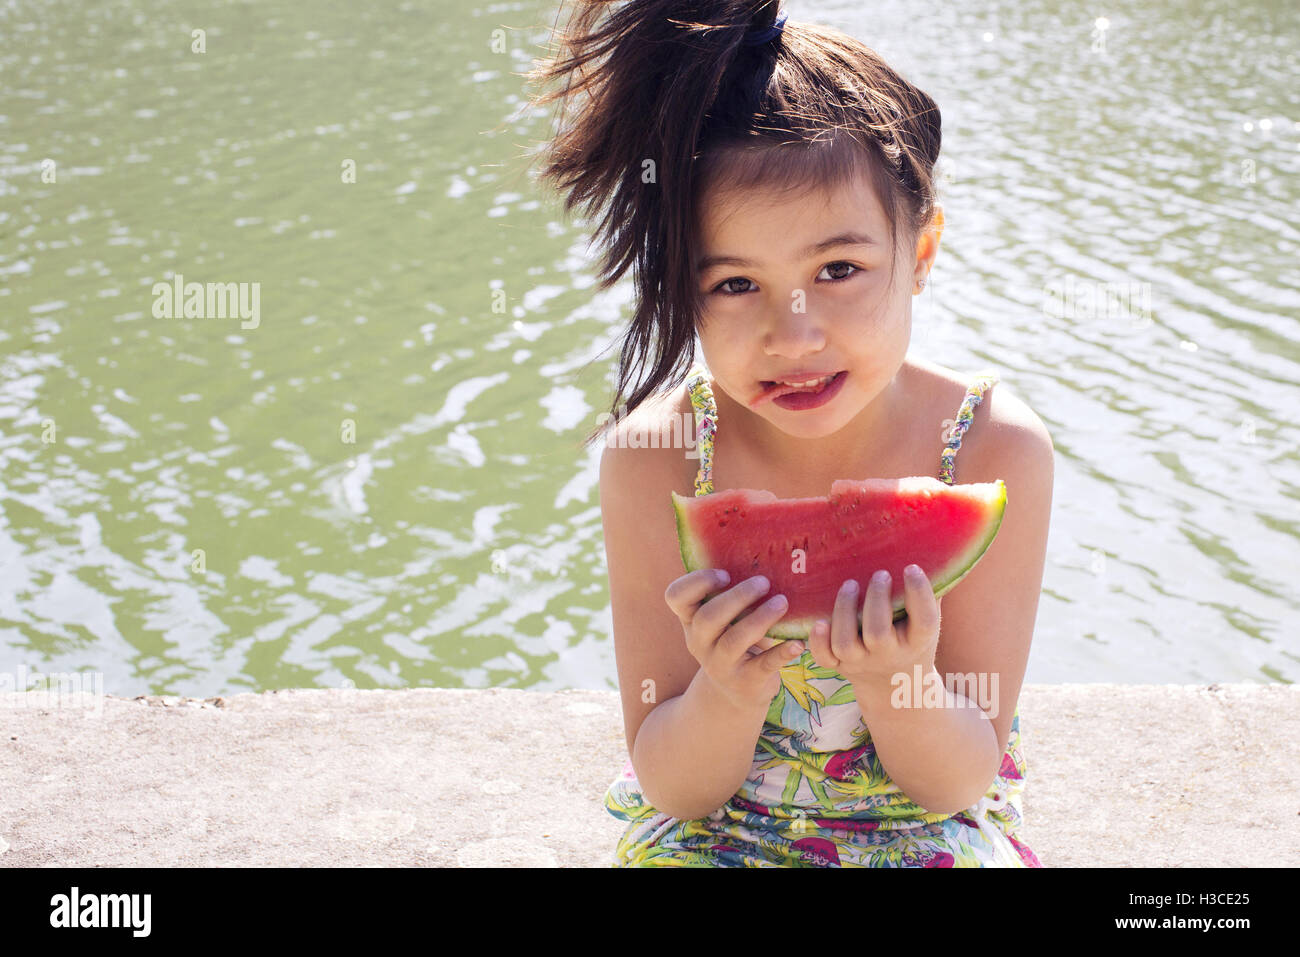 Girl eating watermelon, portrait Stock Photo